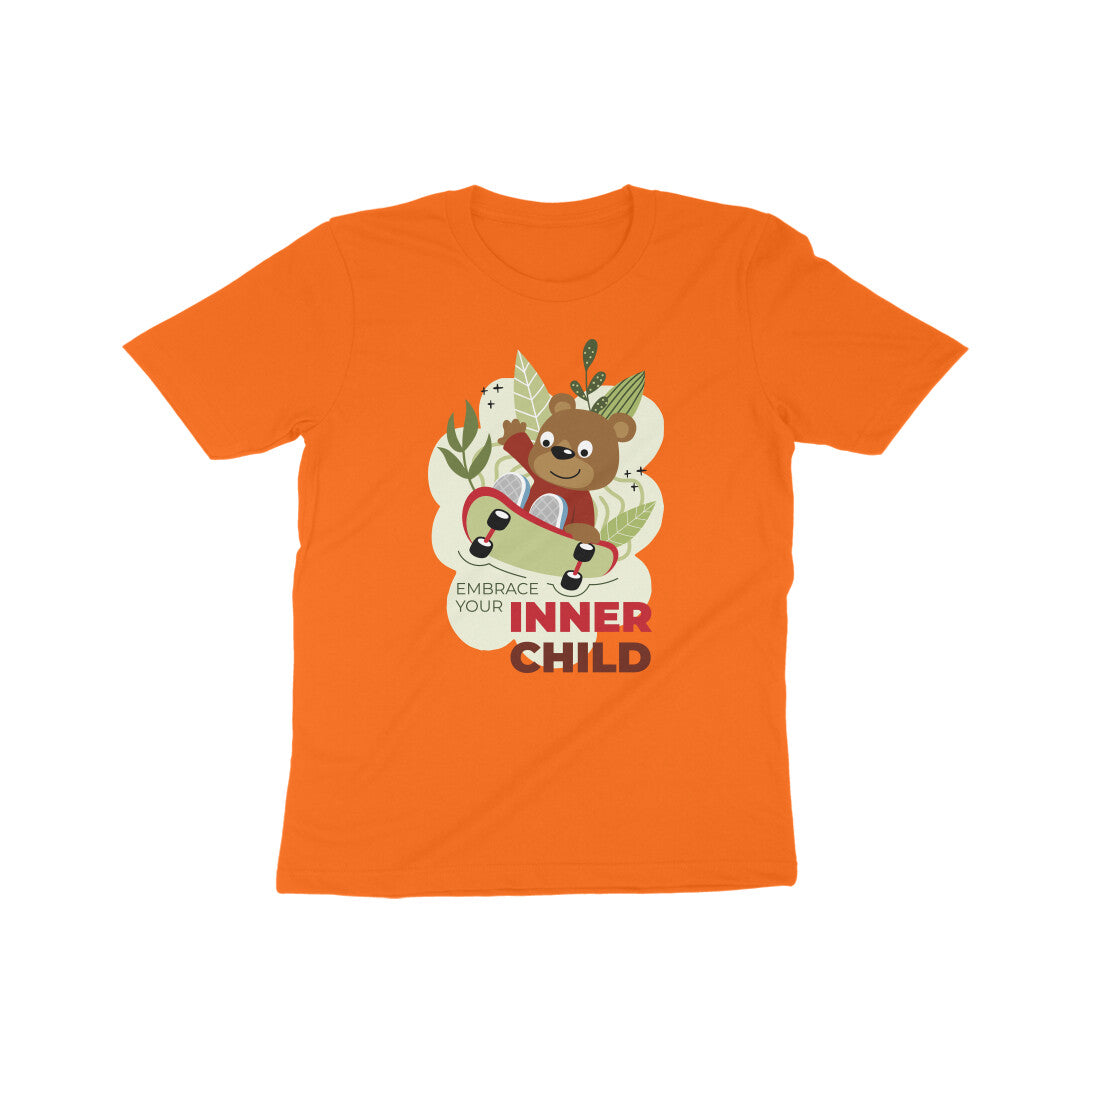 Embrace your inner child Kids T-Shirt